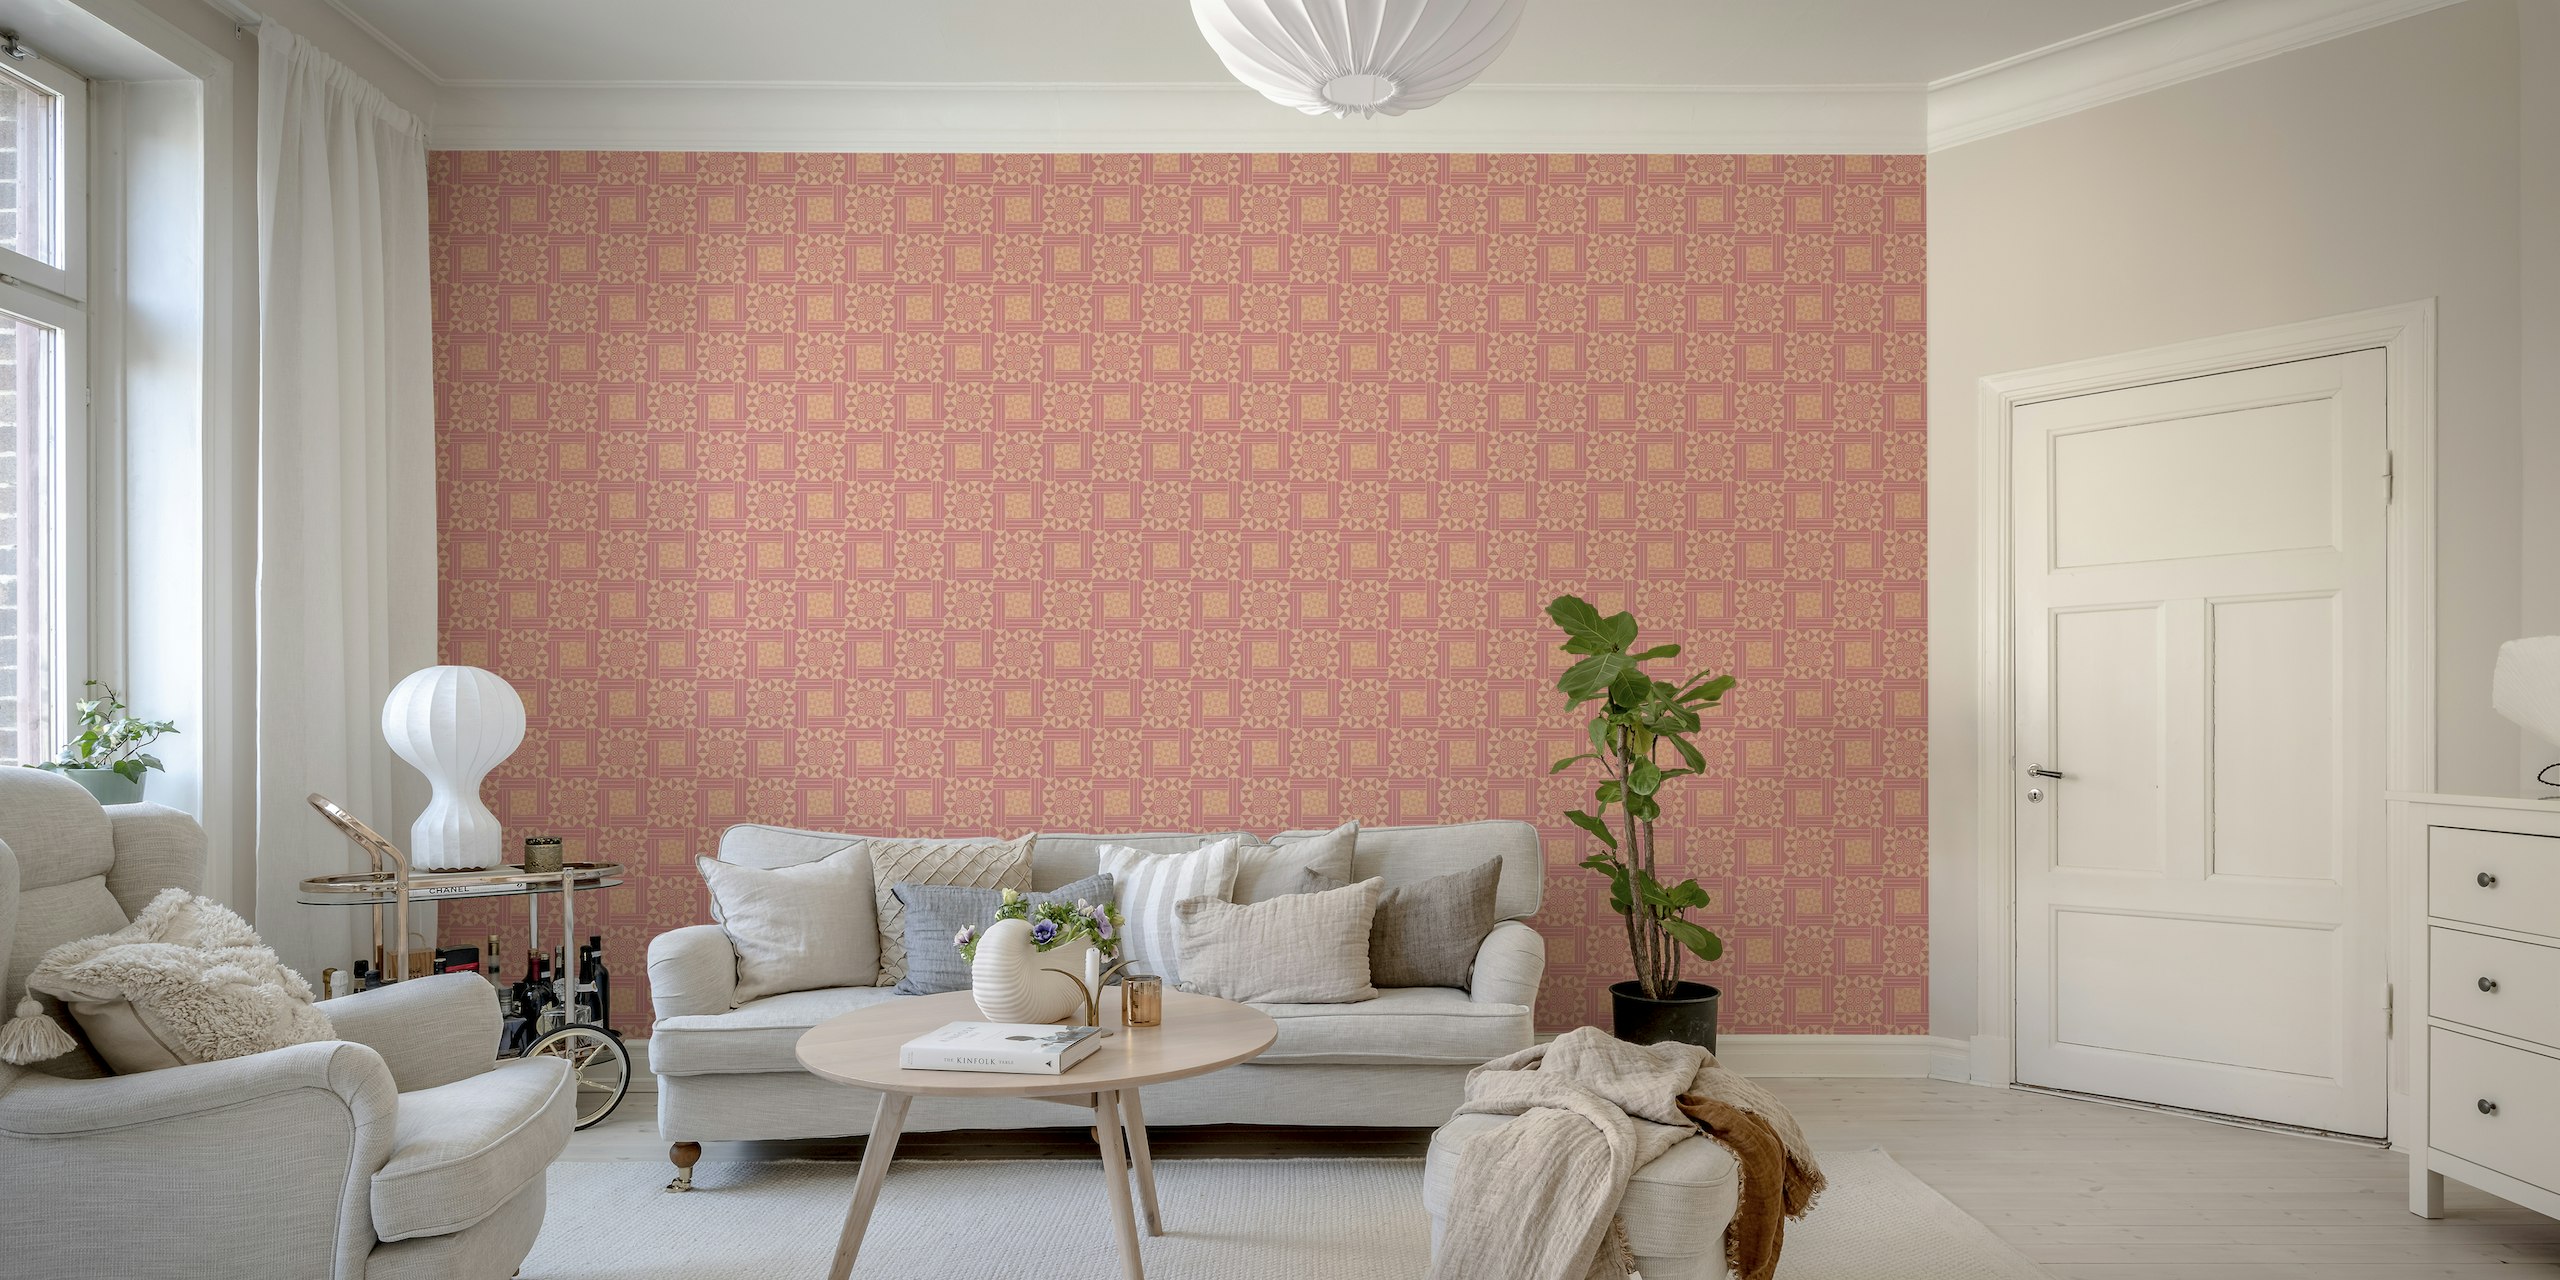 RAVENNA Geometric Tile Mosaic - Peach Fuzz 2 wallpaper